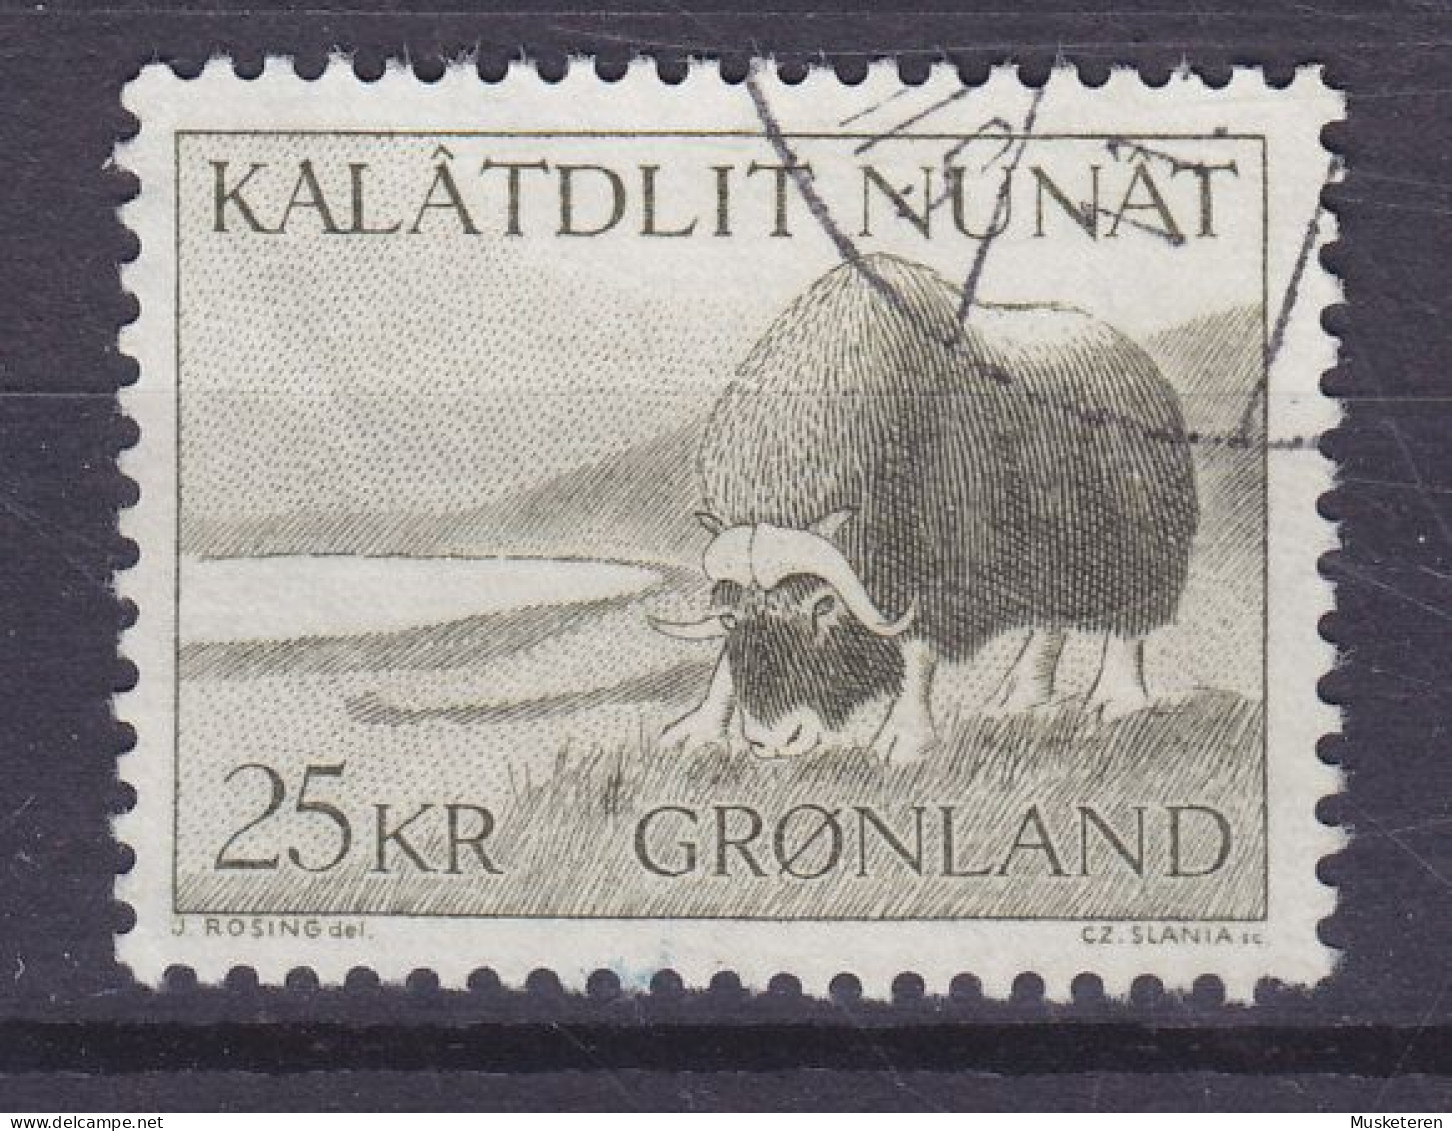 Greenland 1969 Mi. 74, 25 Kr Tierwelt Moschusochse Musk Beef Boeuf Musqué Carne De Res Almizcler (Cz. Slania) - Oblitérés